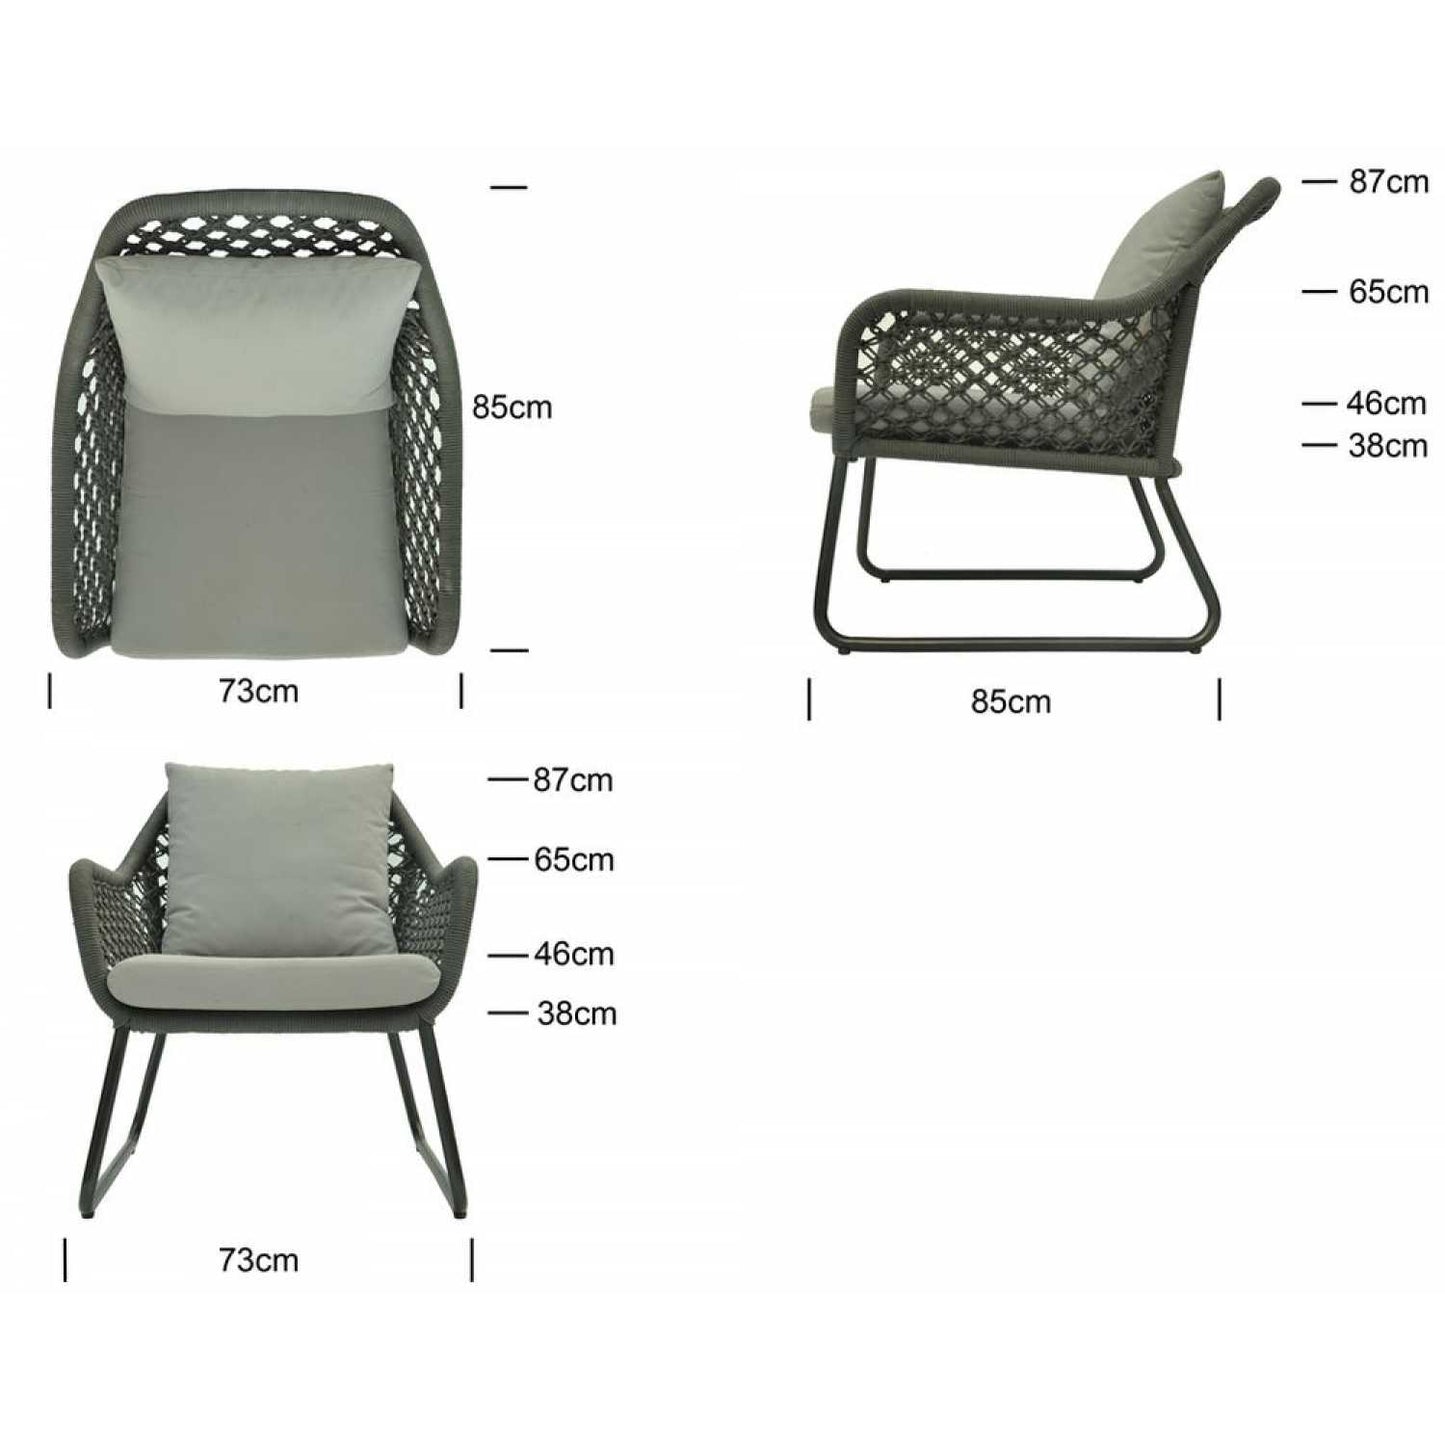 Kona Arm Chair - PadioLiving - Kona Arm Chair - Outdoor Arm Chair - PadioLiving